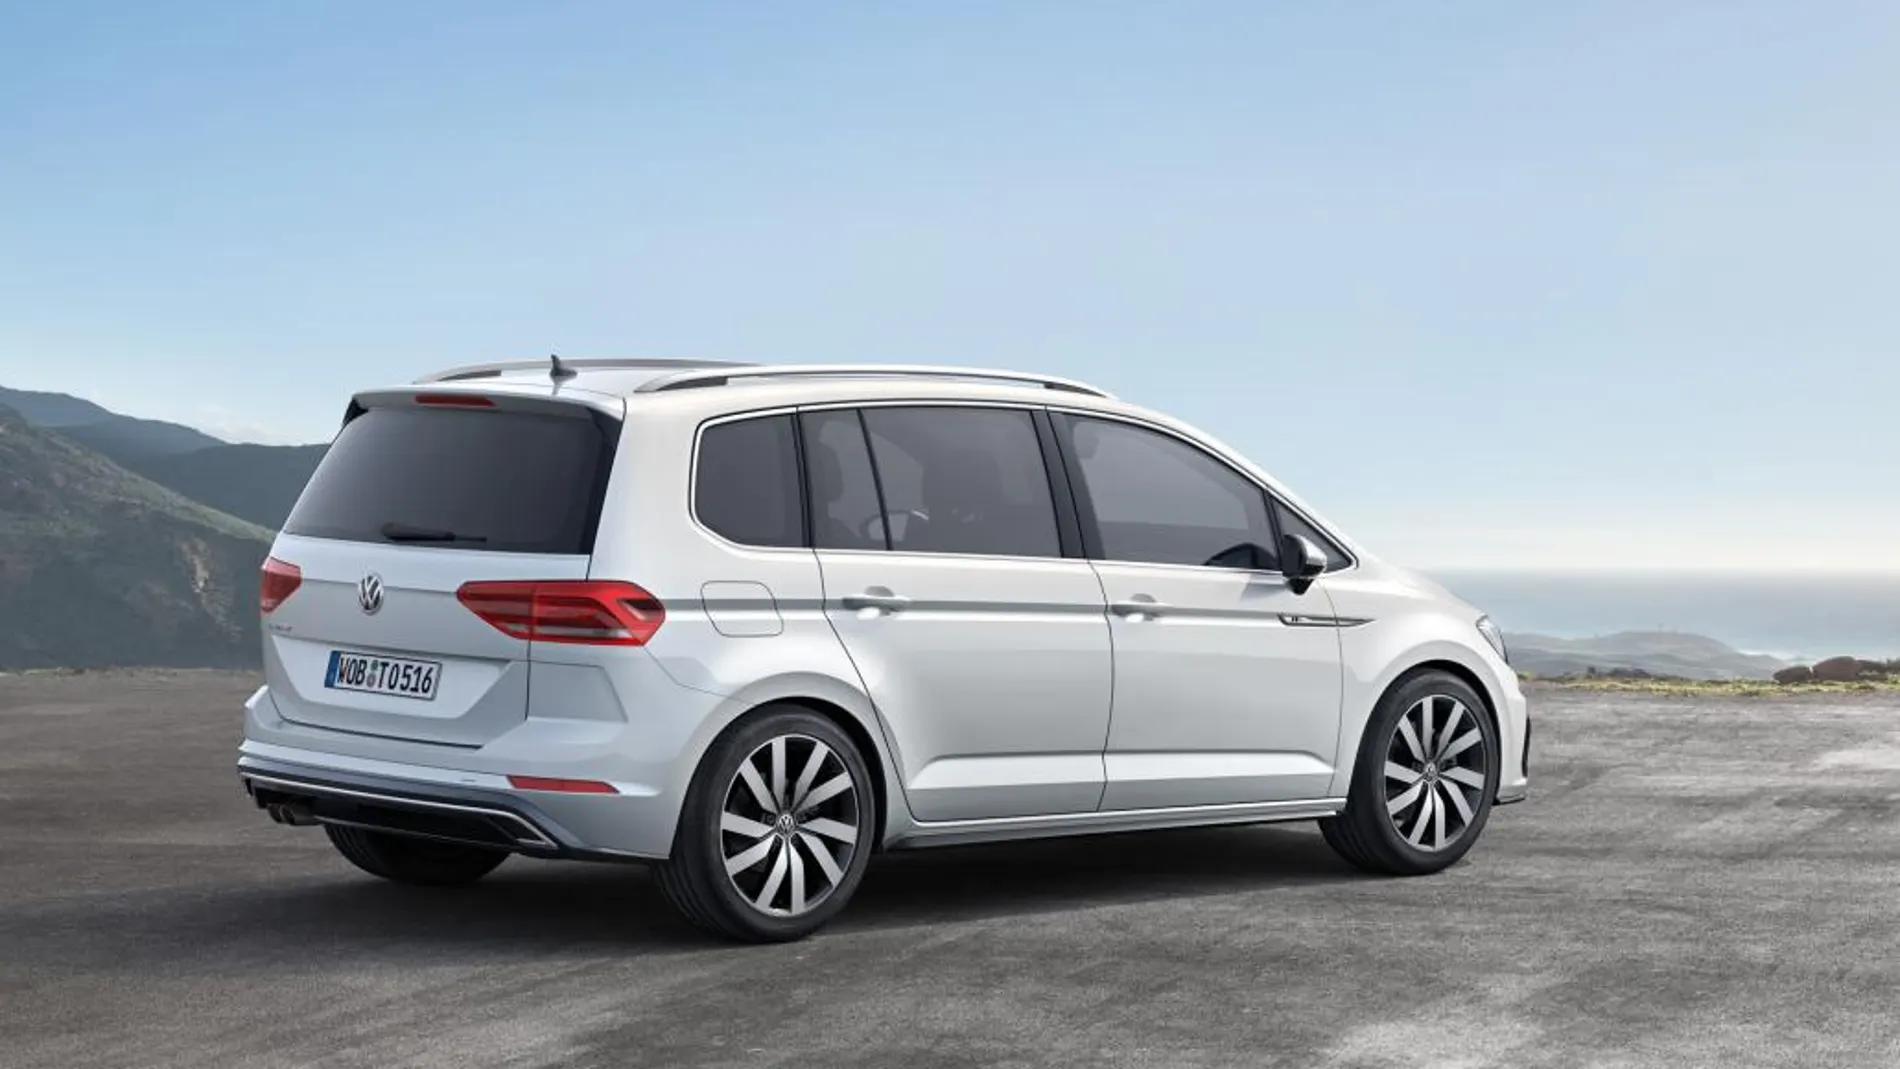 Volkswagen ha vendido 1,9 millones de unidades del Touran hasta la fecha.